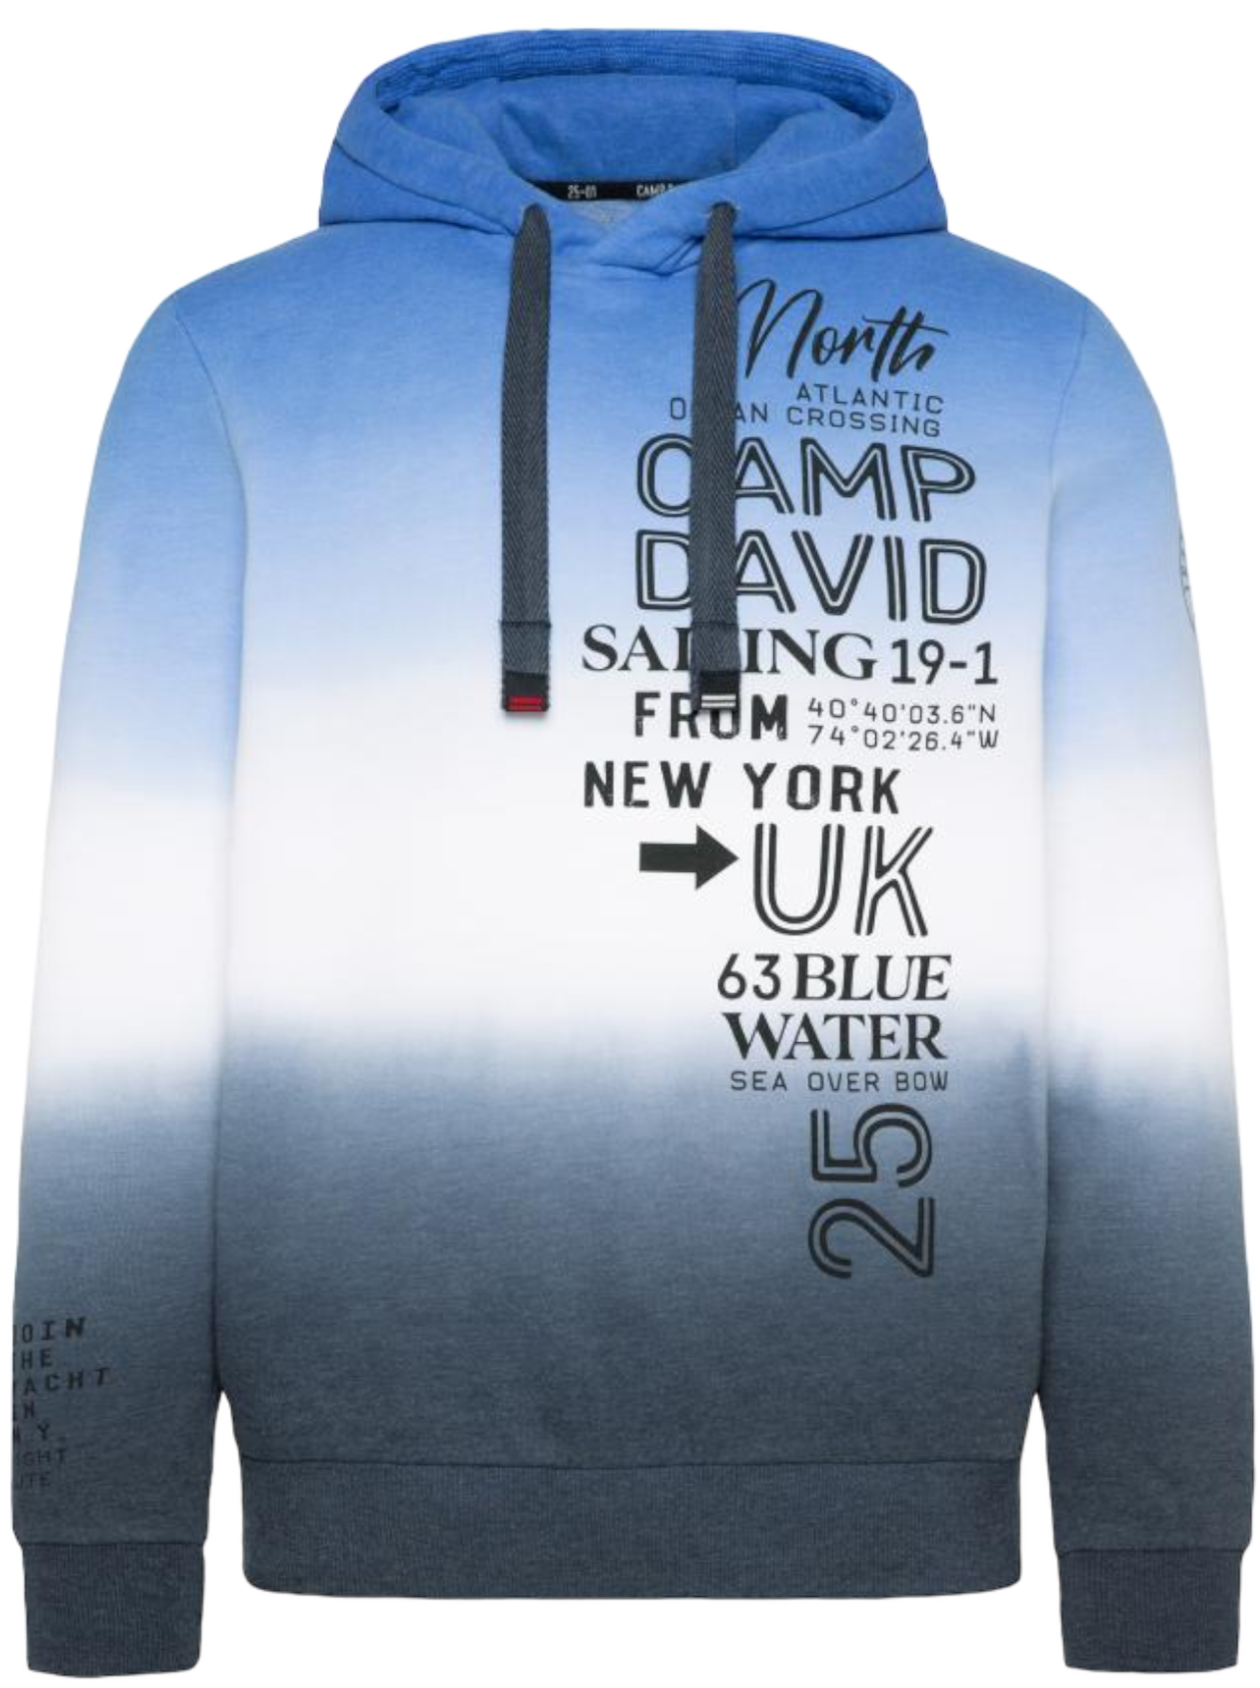 David Sweatshirts: Camp Fashion & Versatility Stateshop and Cardigans - Quality Sweaters,